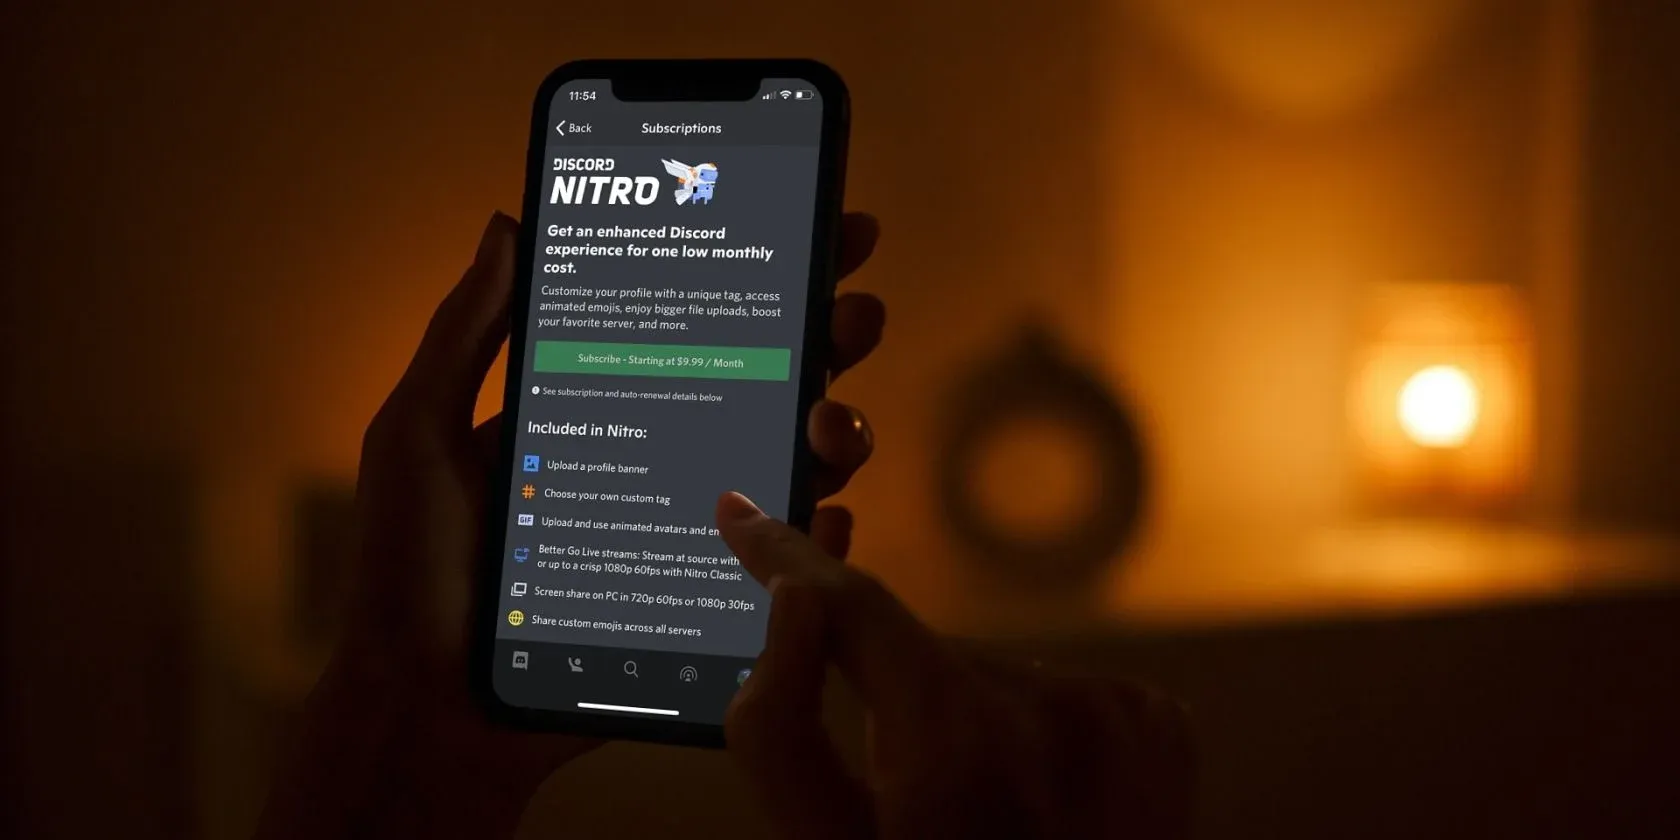 discord nitro vs nitro classic